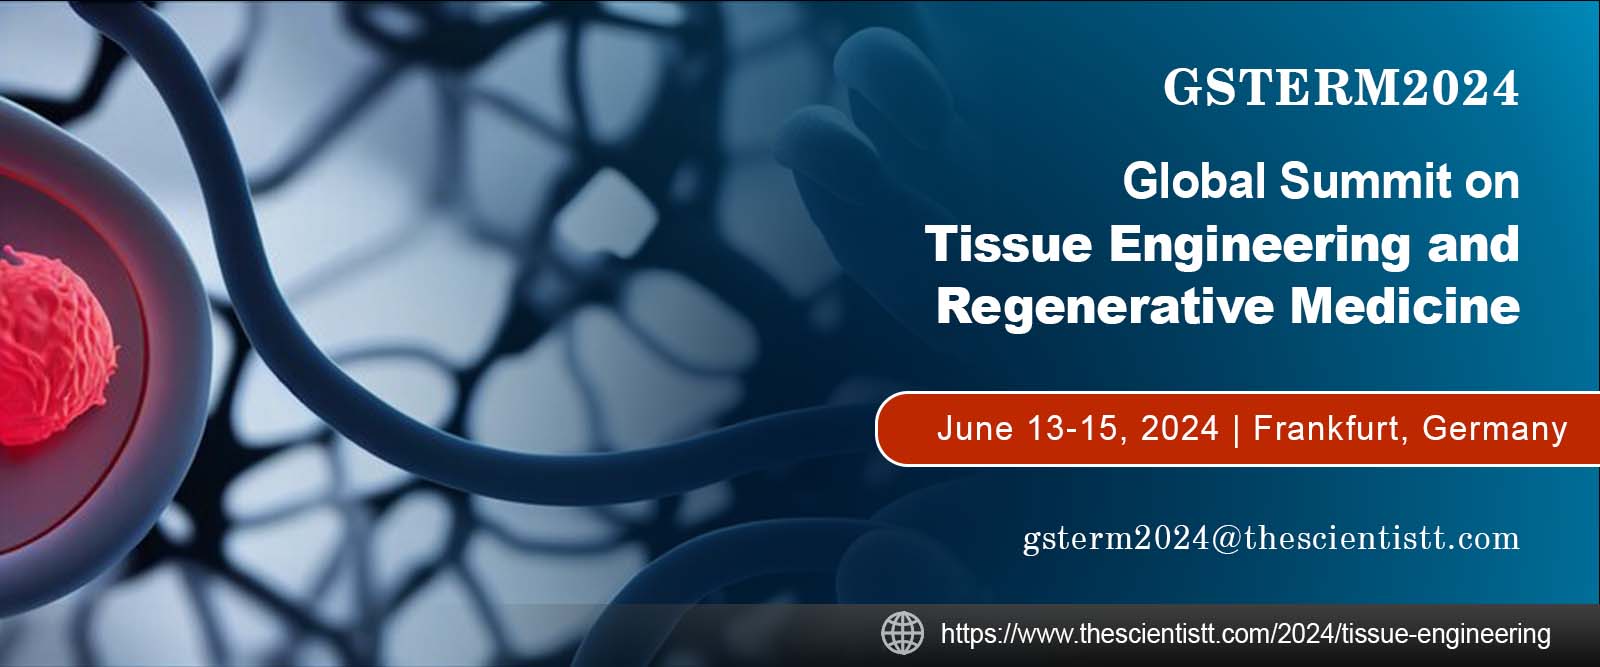 Global Summit on Tissue Engineering and Regenerative Medicine